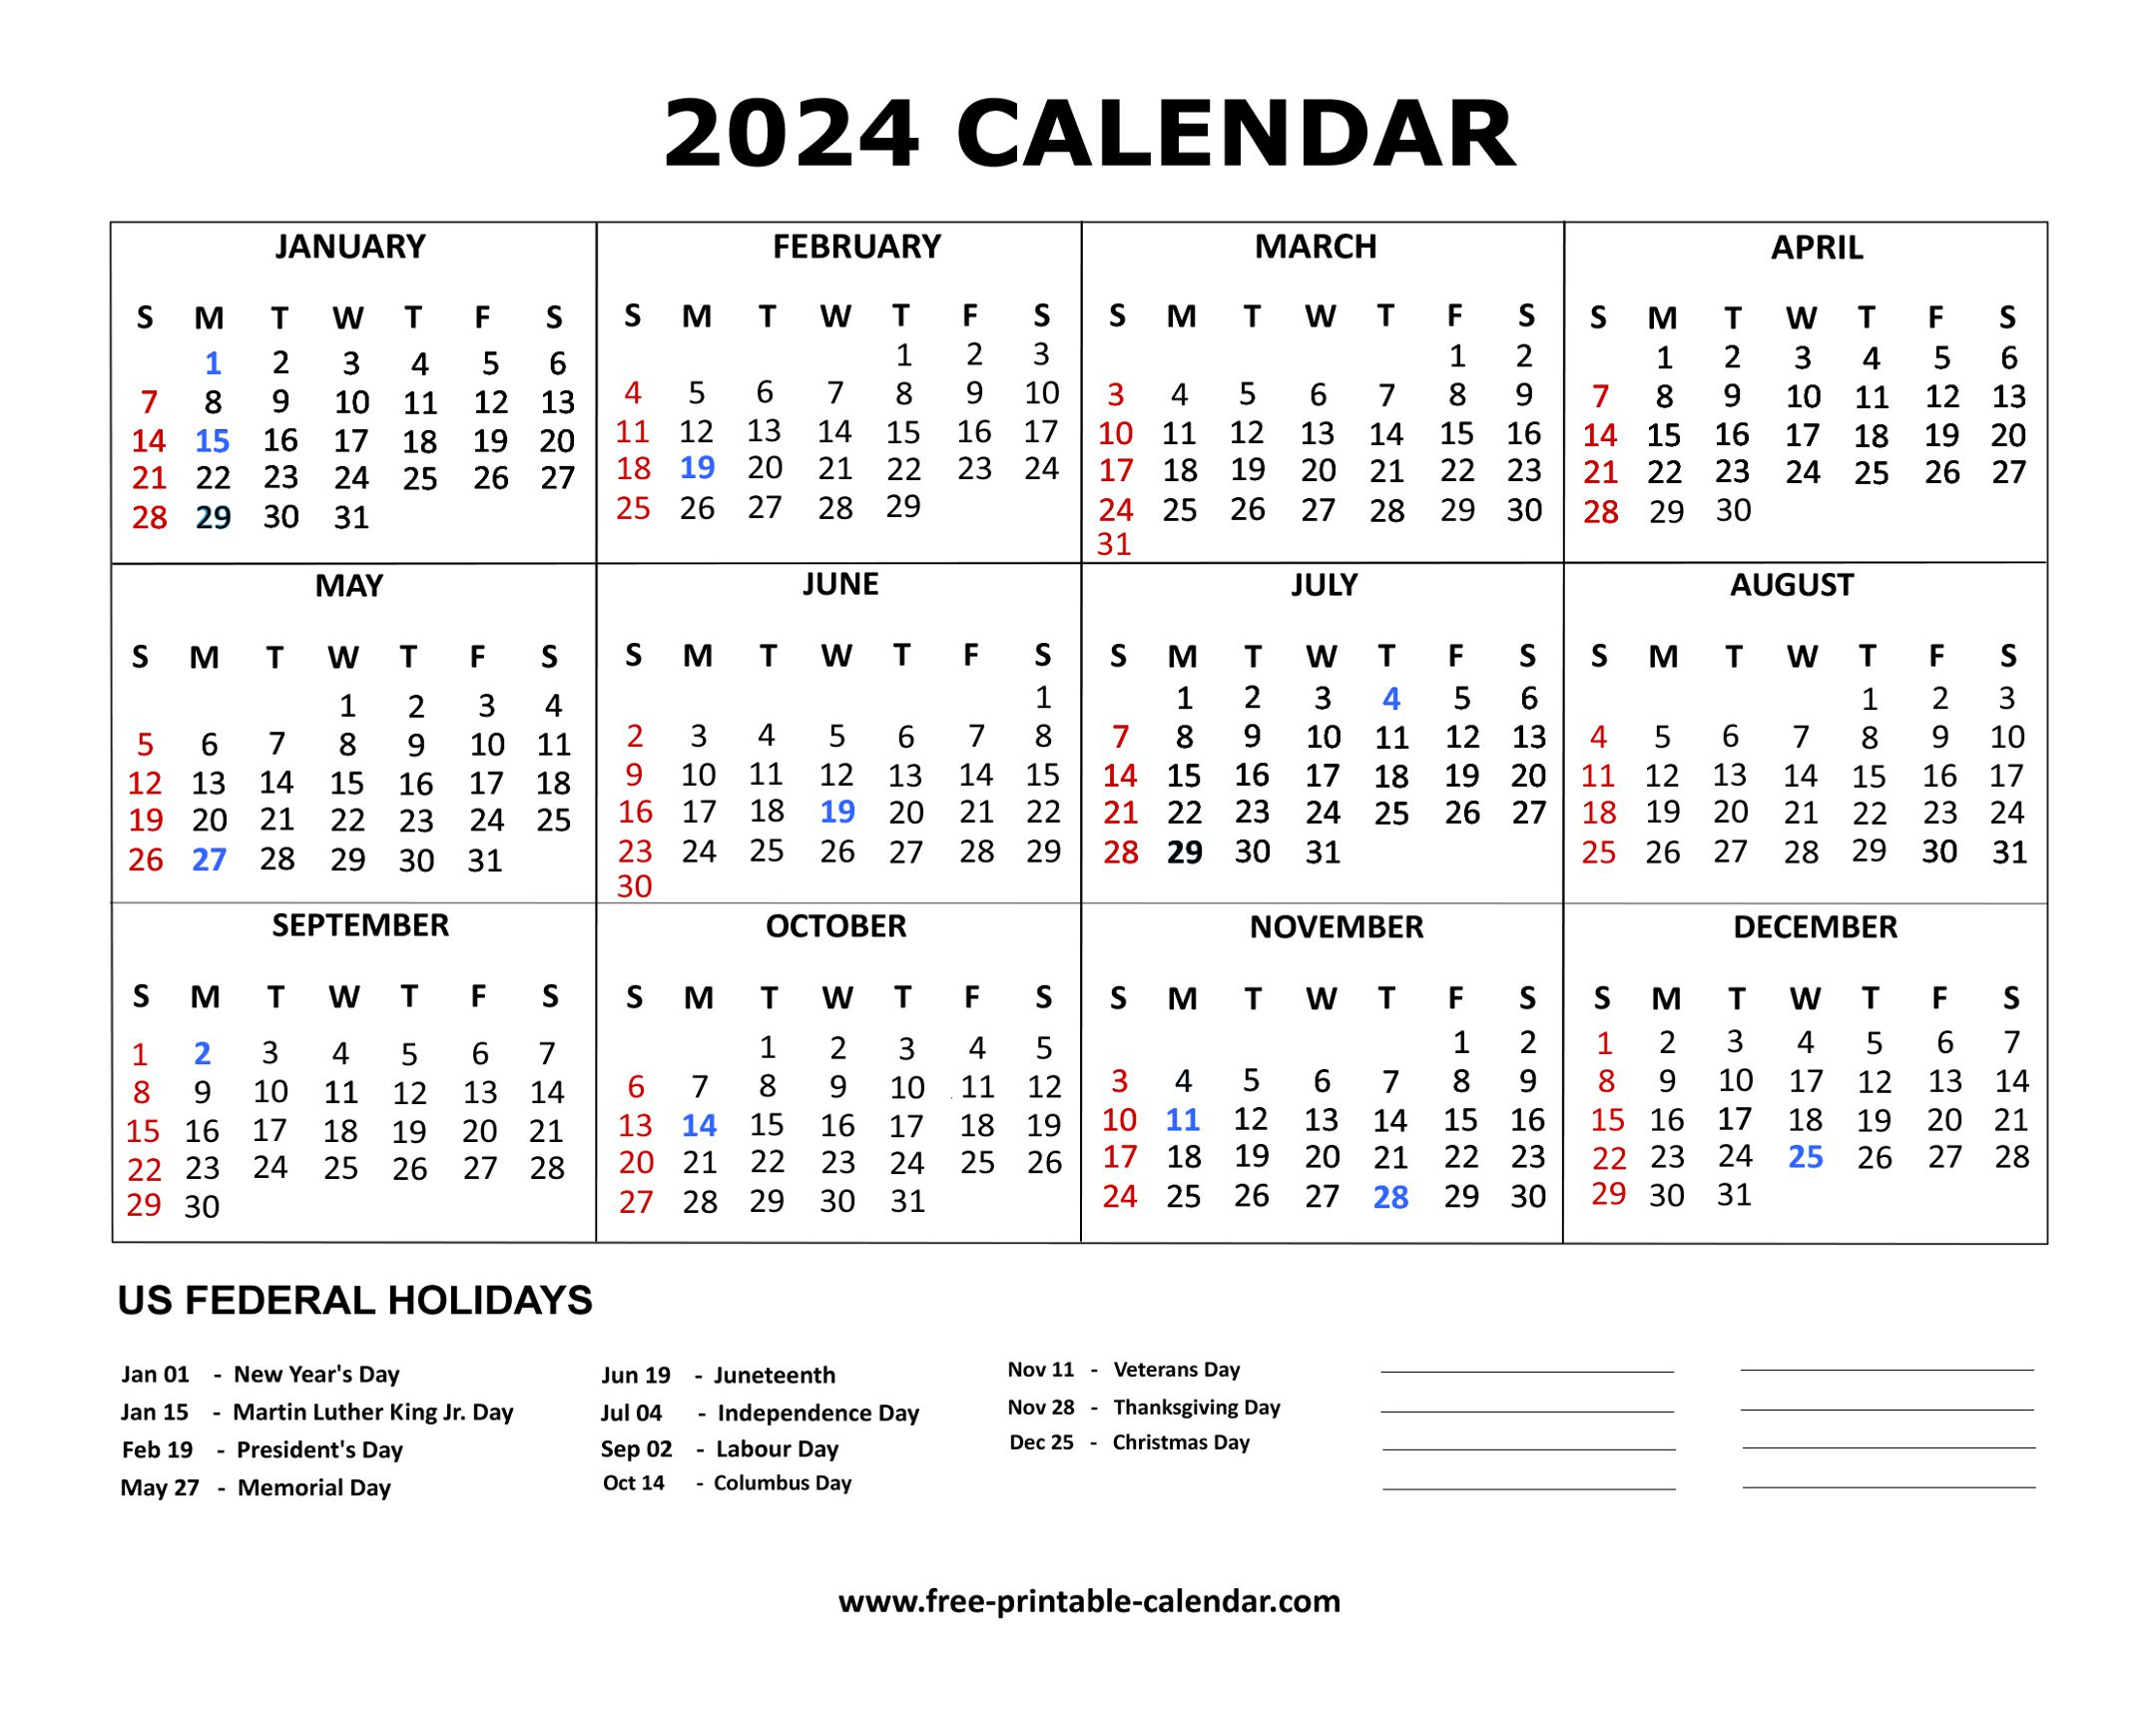 2024 Calendar | Free Printable Calendar 2024 Yearly With Holidays